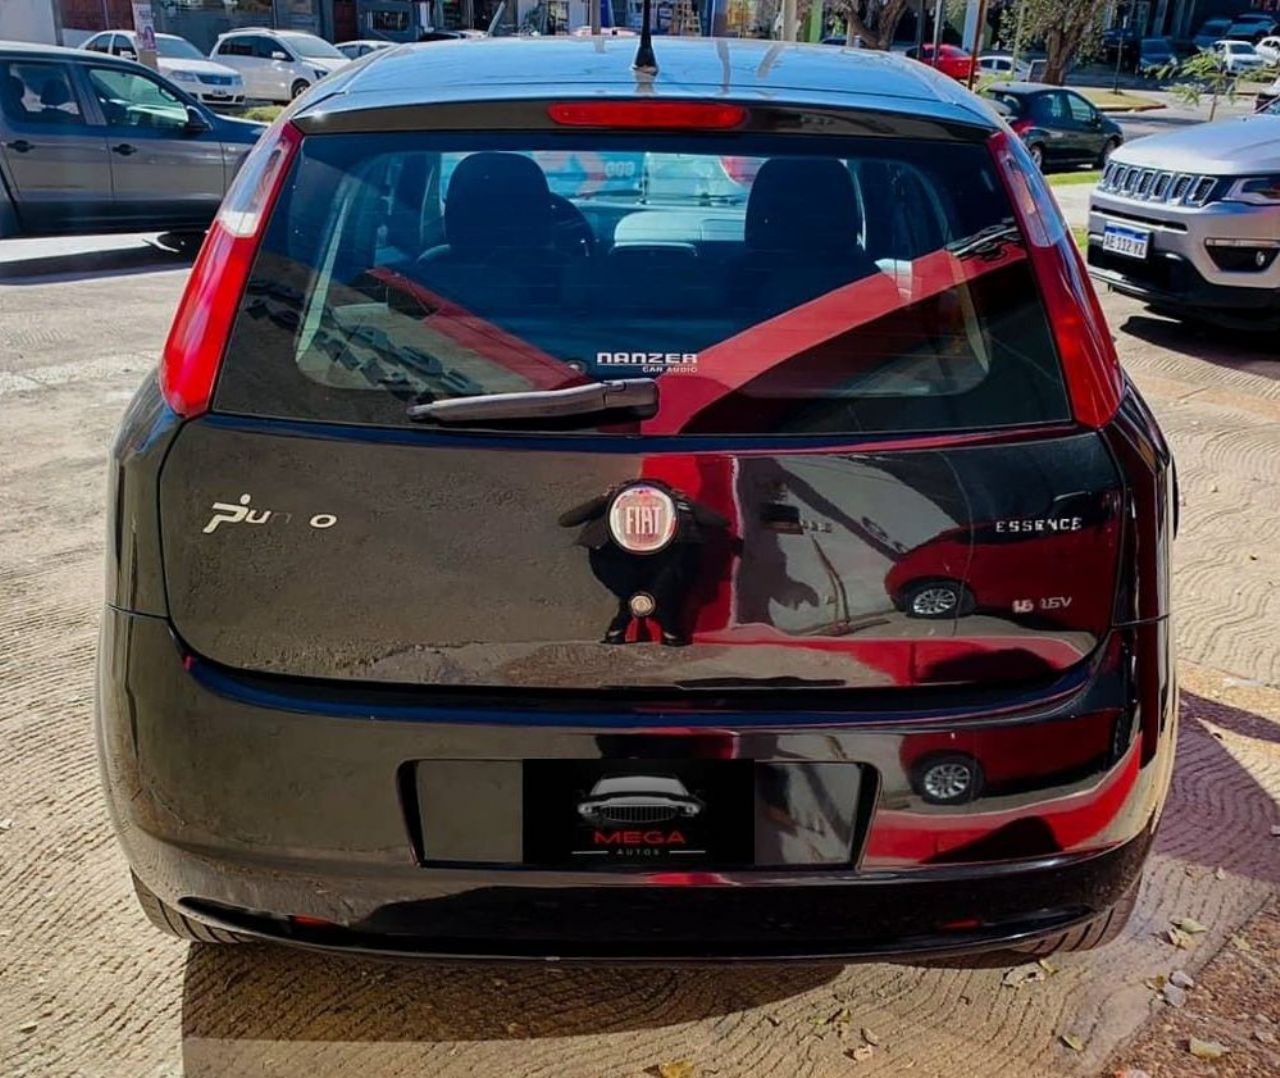 Fiat Punto Usado Financiado en Córdoba, deRuedas